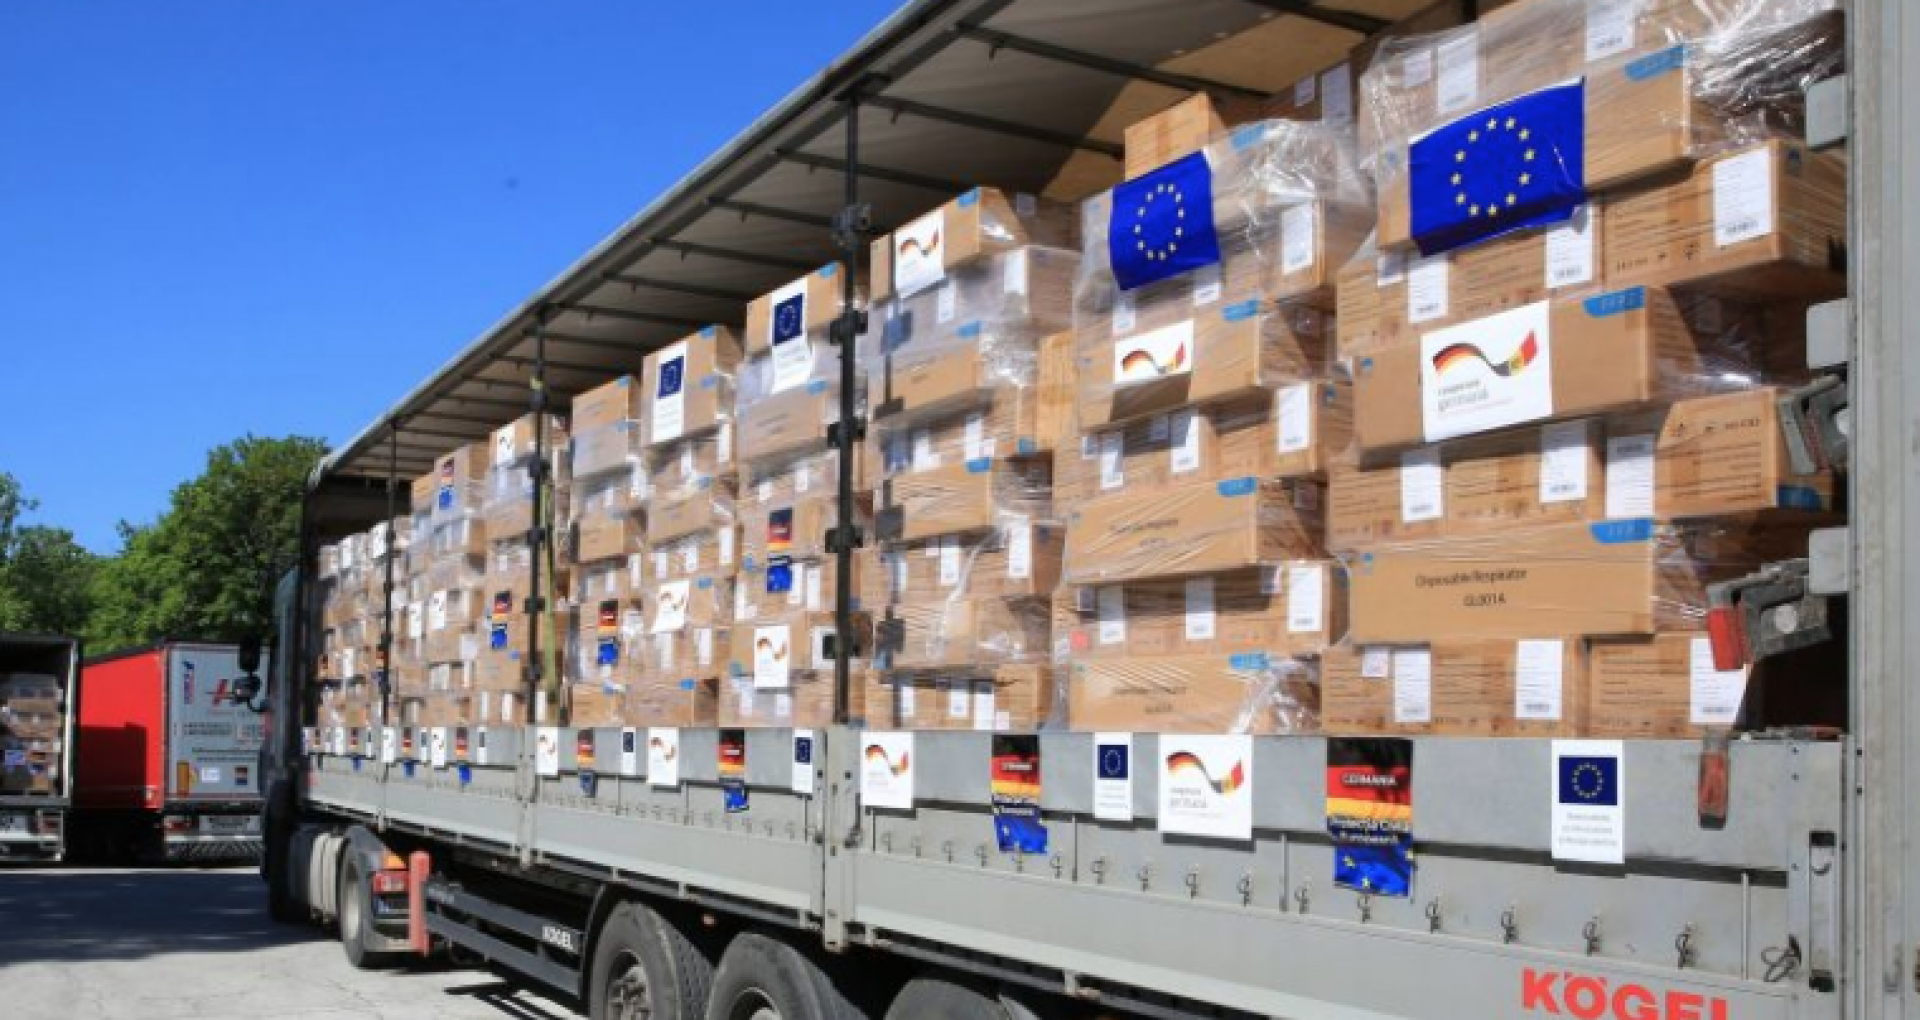 Germany Donated Moldova Medical Equipment Worth 9.6 Million Euros